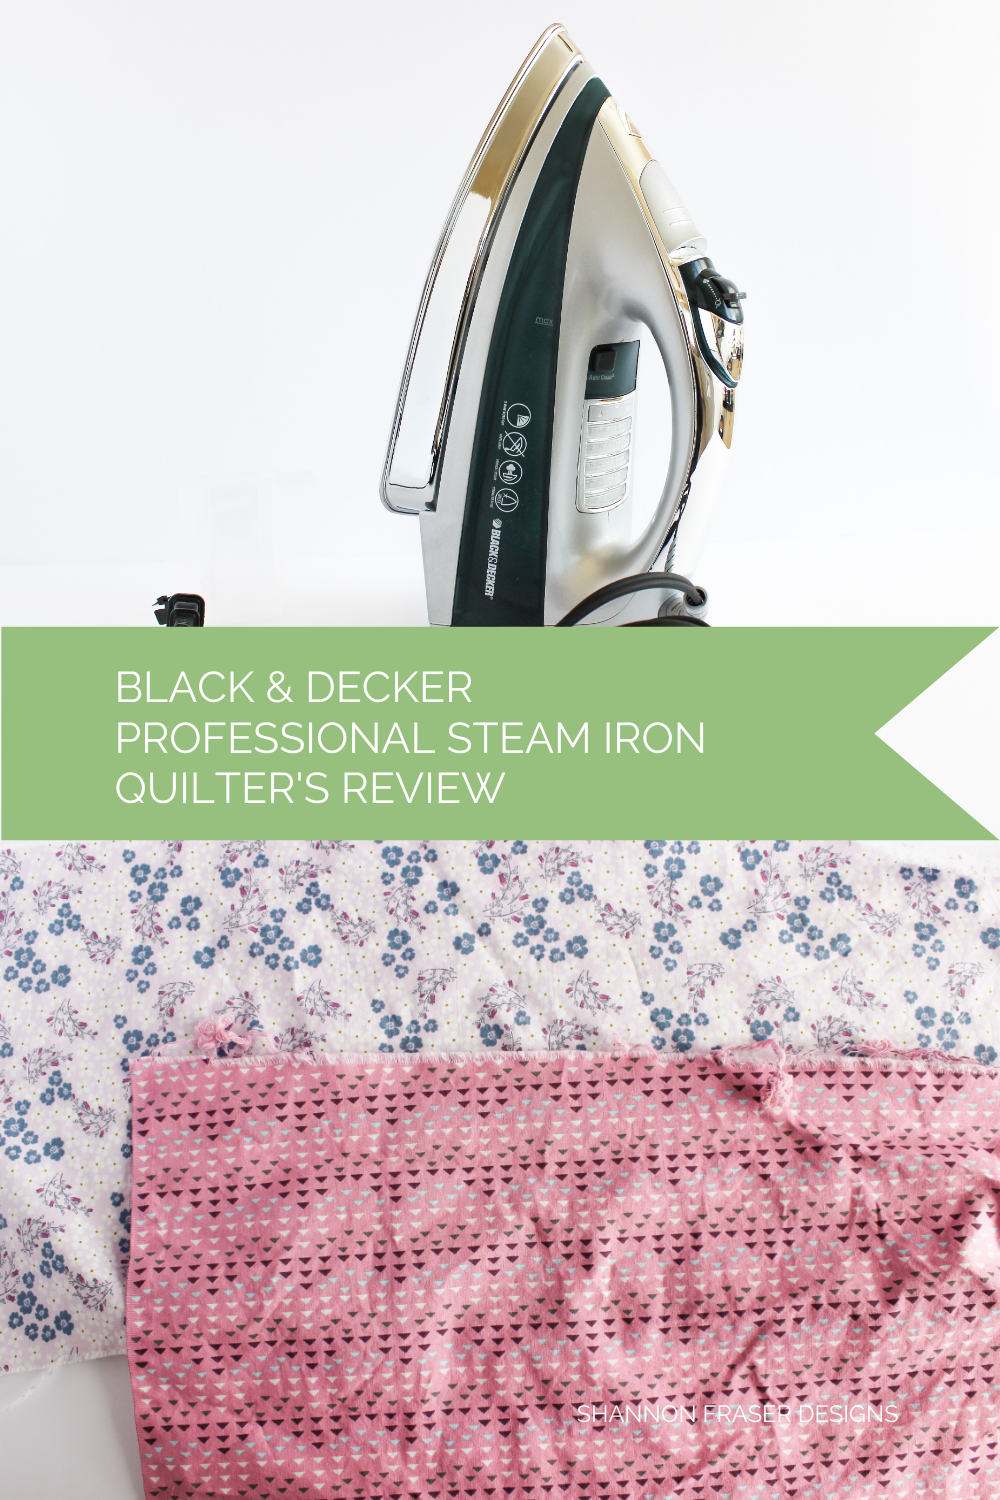 Black & Decker Professional Steam Iron Review – Shannon Fraser Designs